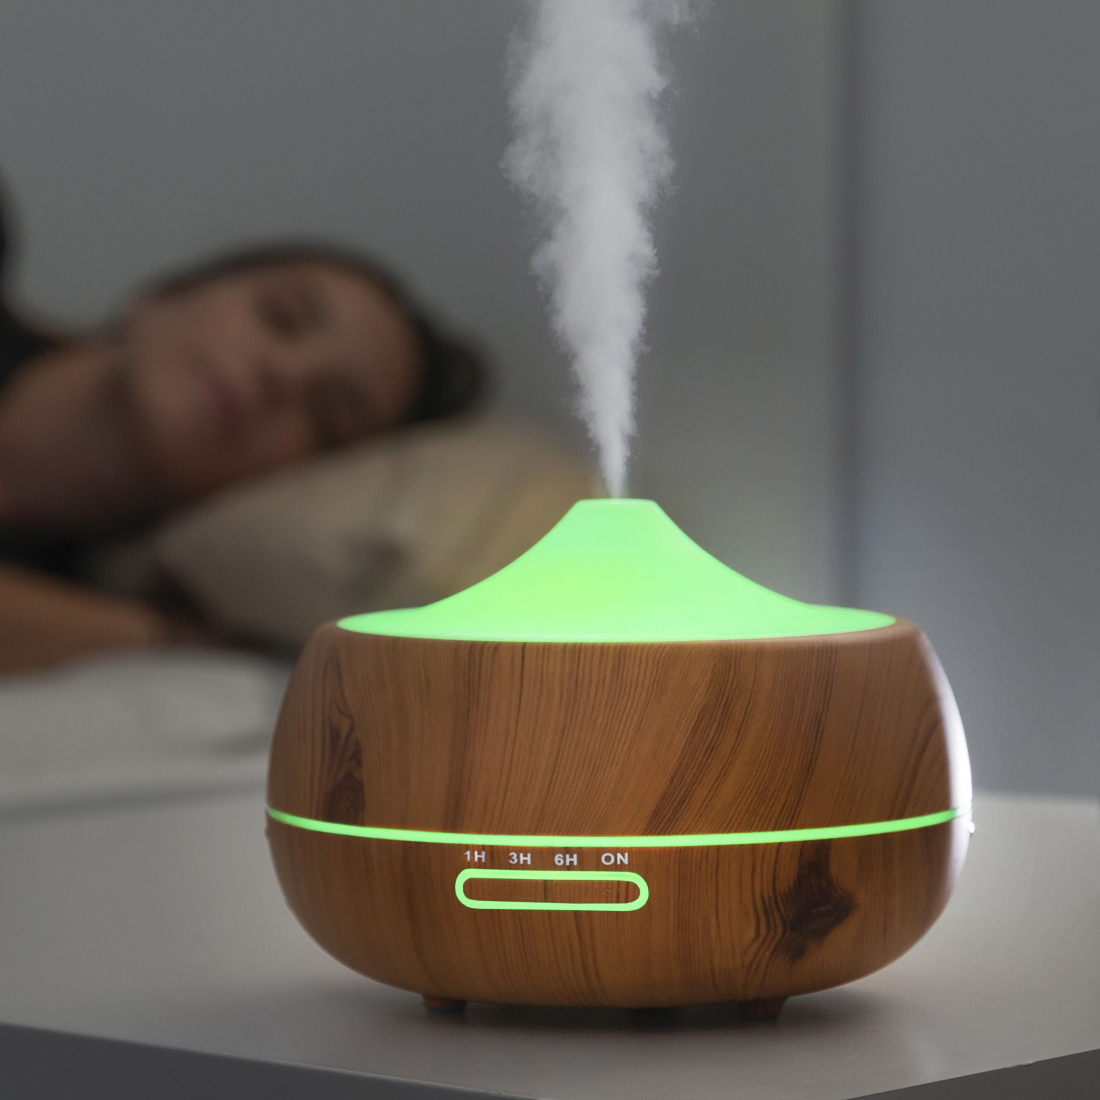 'Aromatherapy' Humidifier